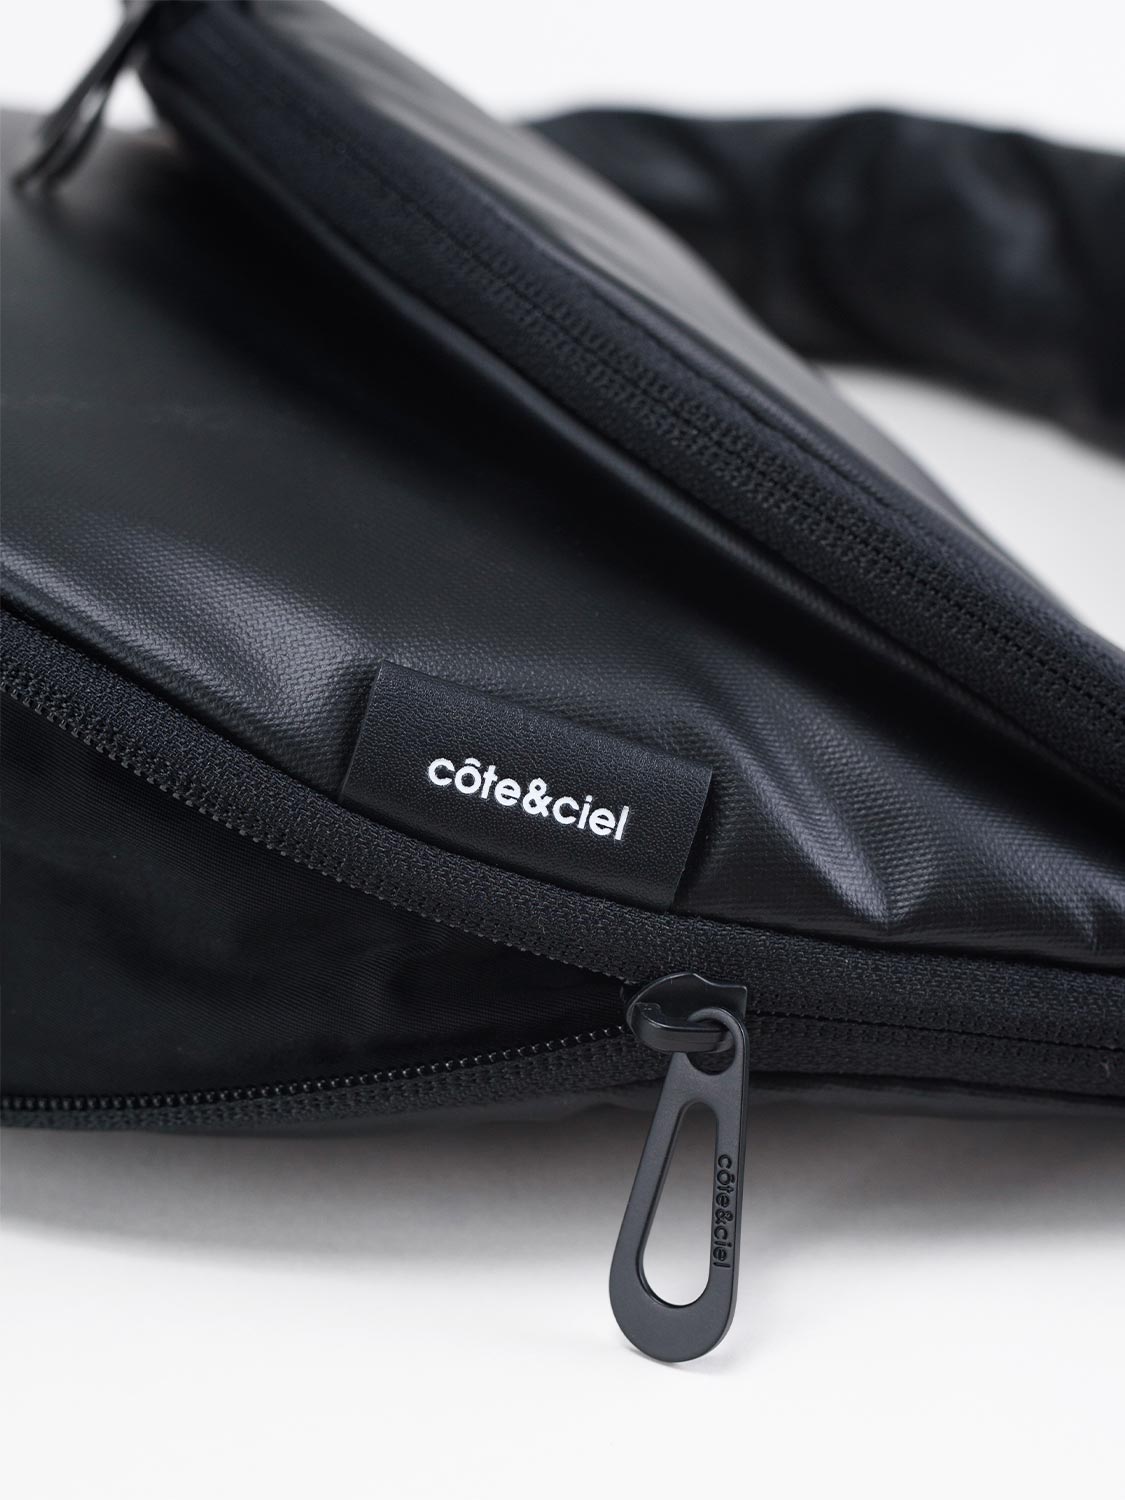 Côte & Ciel Black Hala S Bag